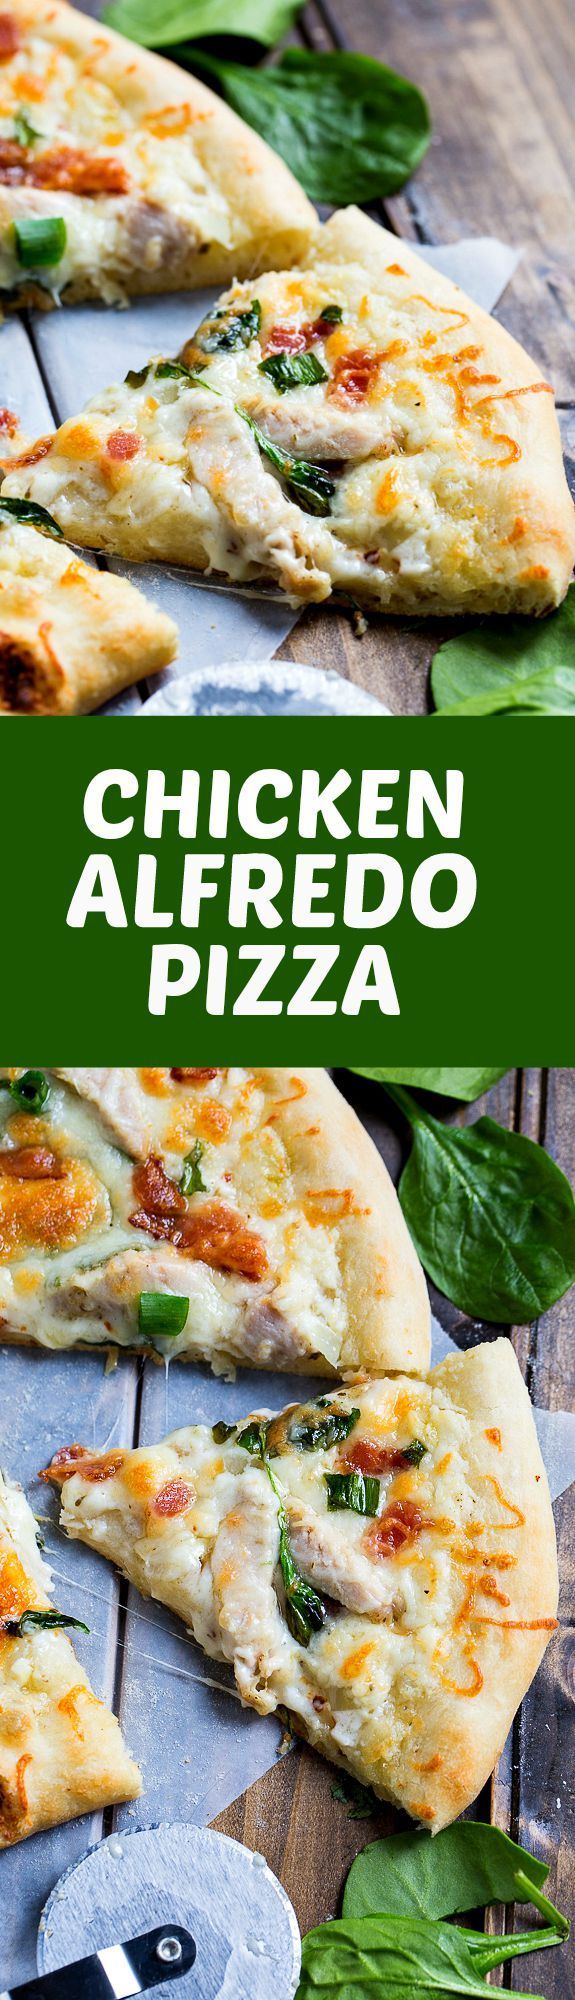 Chicken Alfredo Pizza – Garlic butter and a creamy alfredo sauce make this one delicious pizza!